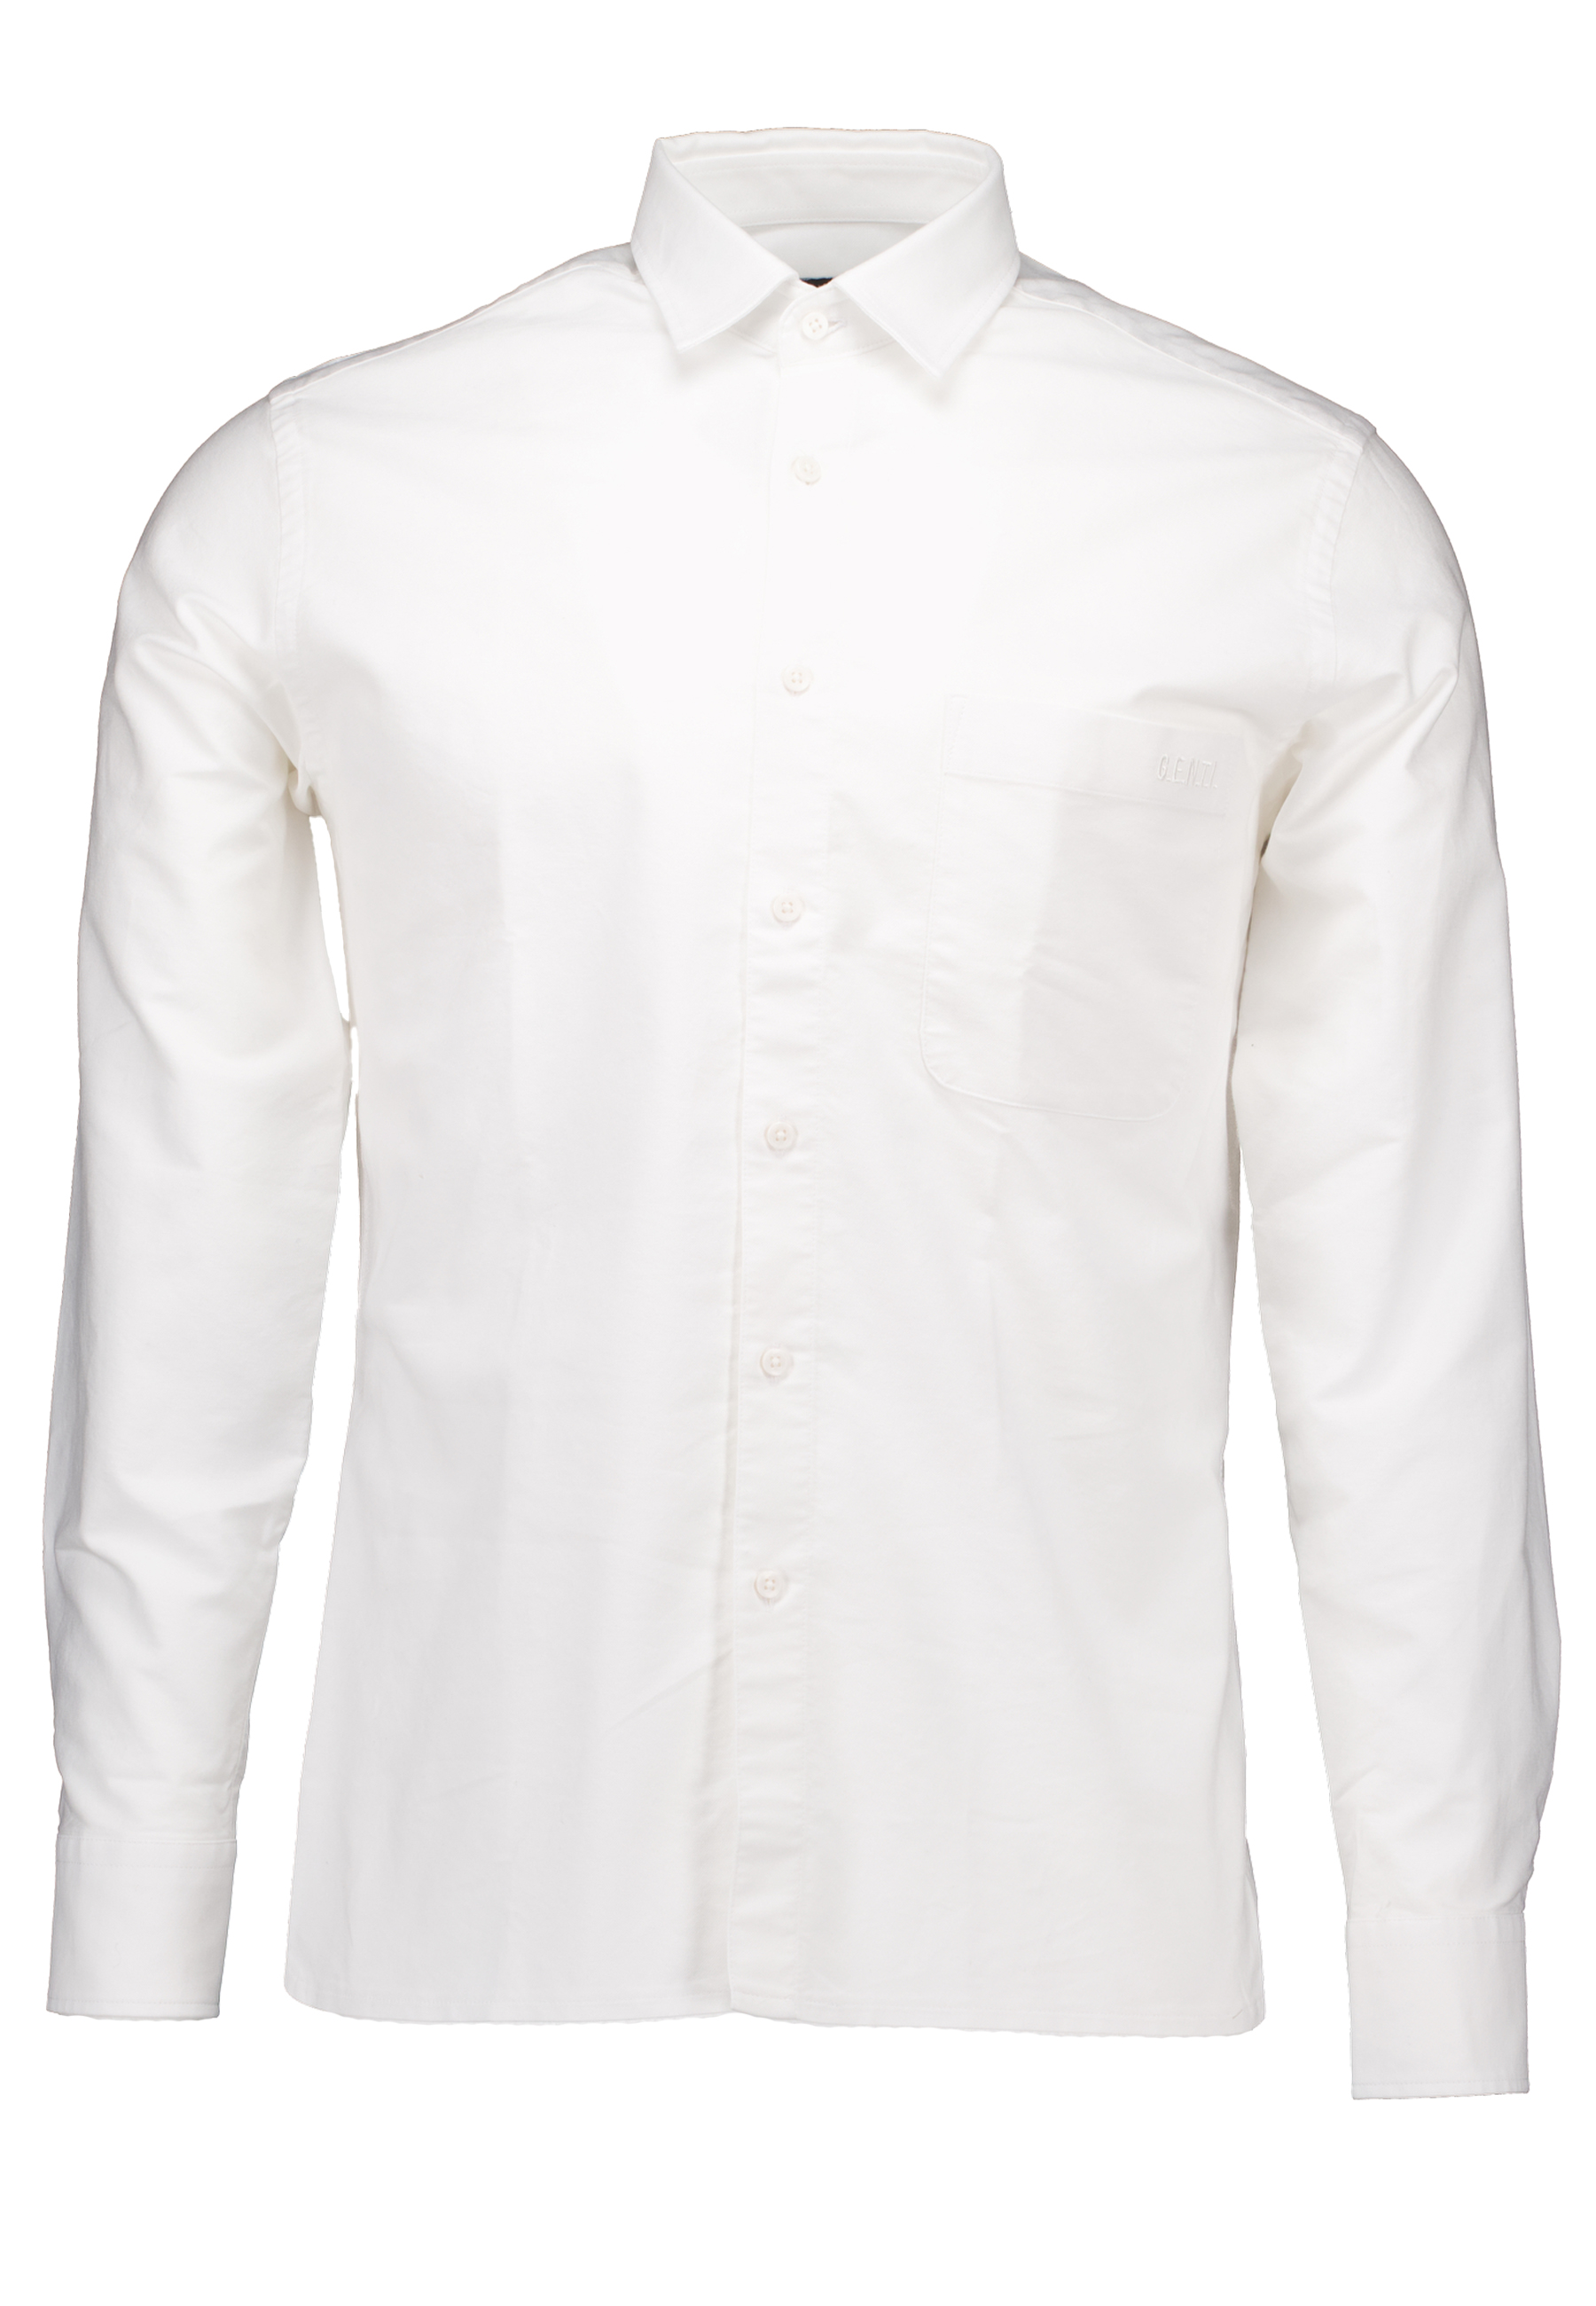 Overhemd Wit Bruce fashion lange mouw overhemden wit